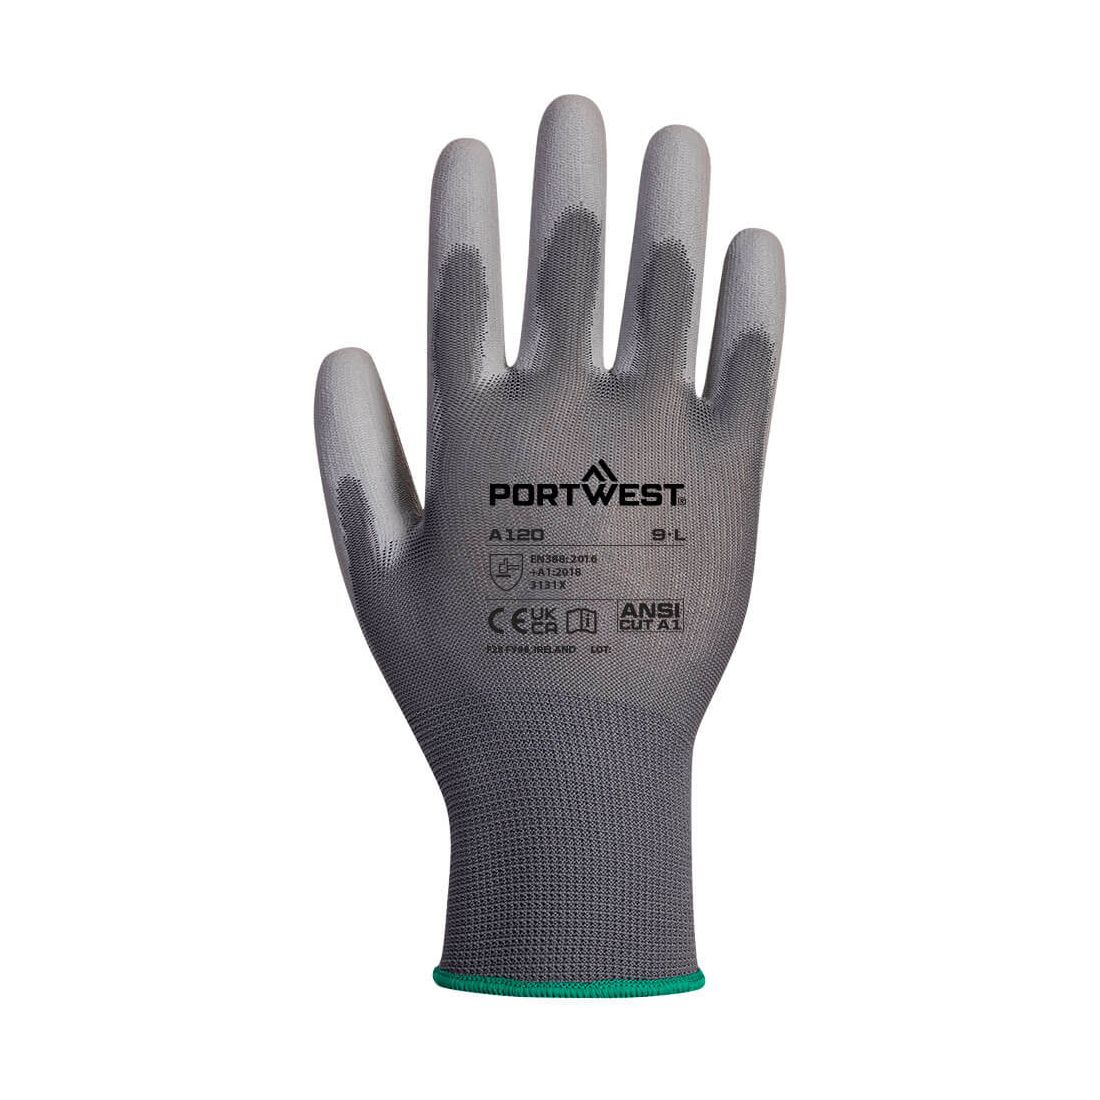 Portwest PU Palm Glove Grey